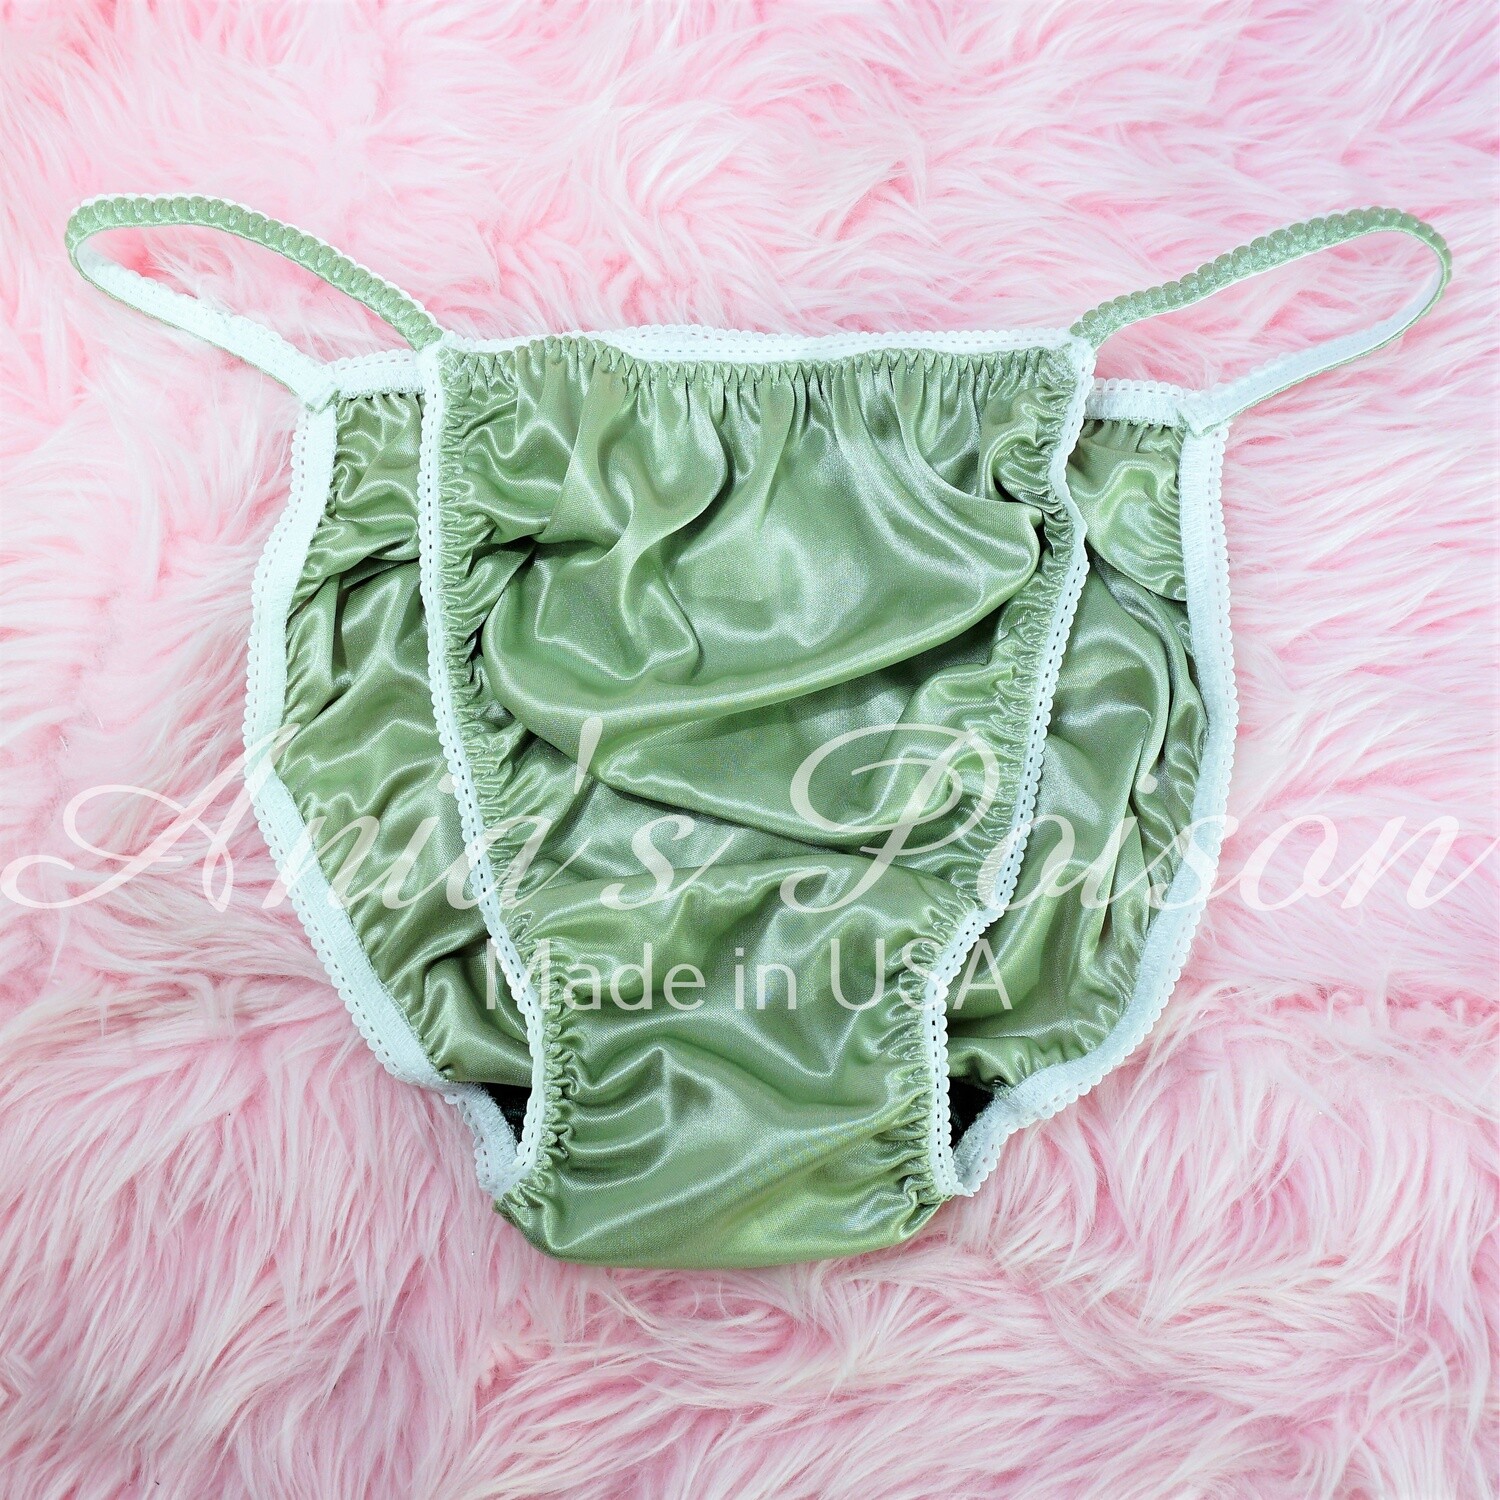 Ania's Poison Butter Soft SATIN MANties Rare Vintage Style Mint Green string bikini soft Sissy panties for men sz XXL FLASH SALE